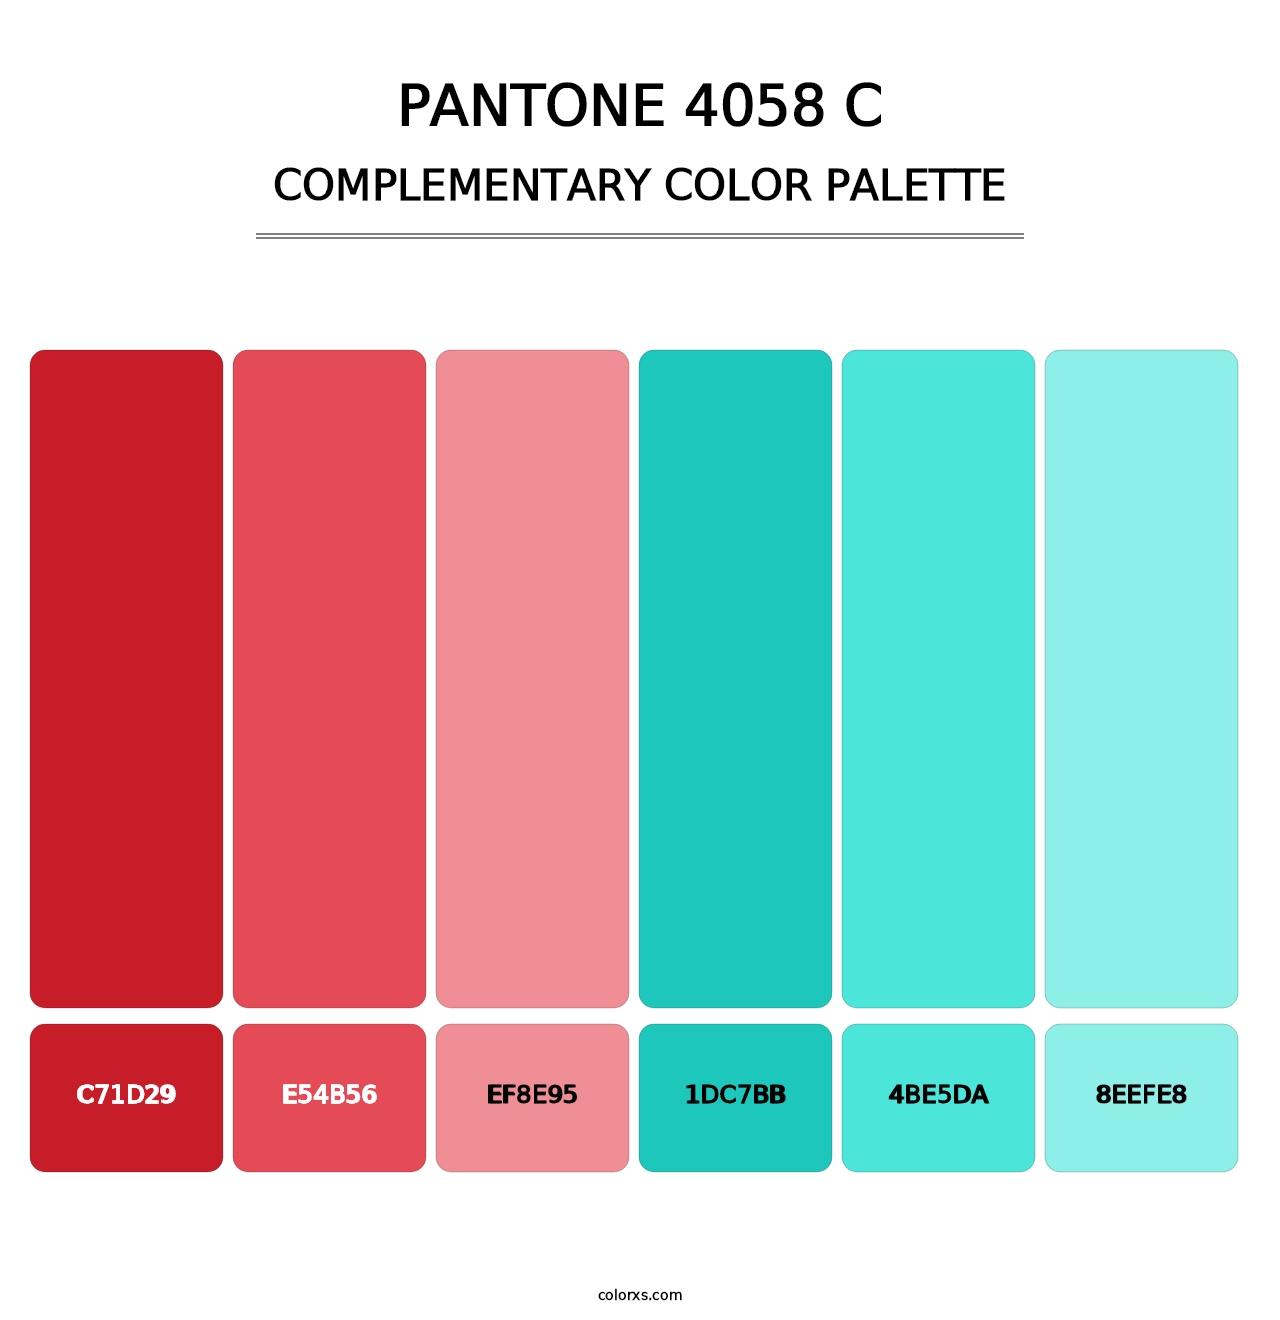 PANTONE 4058 C - Complementary Color Palette